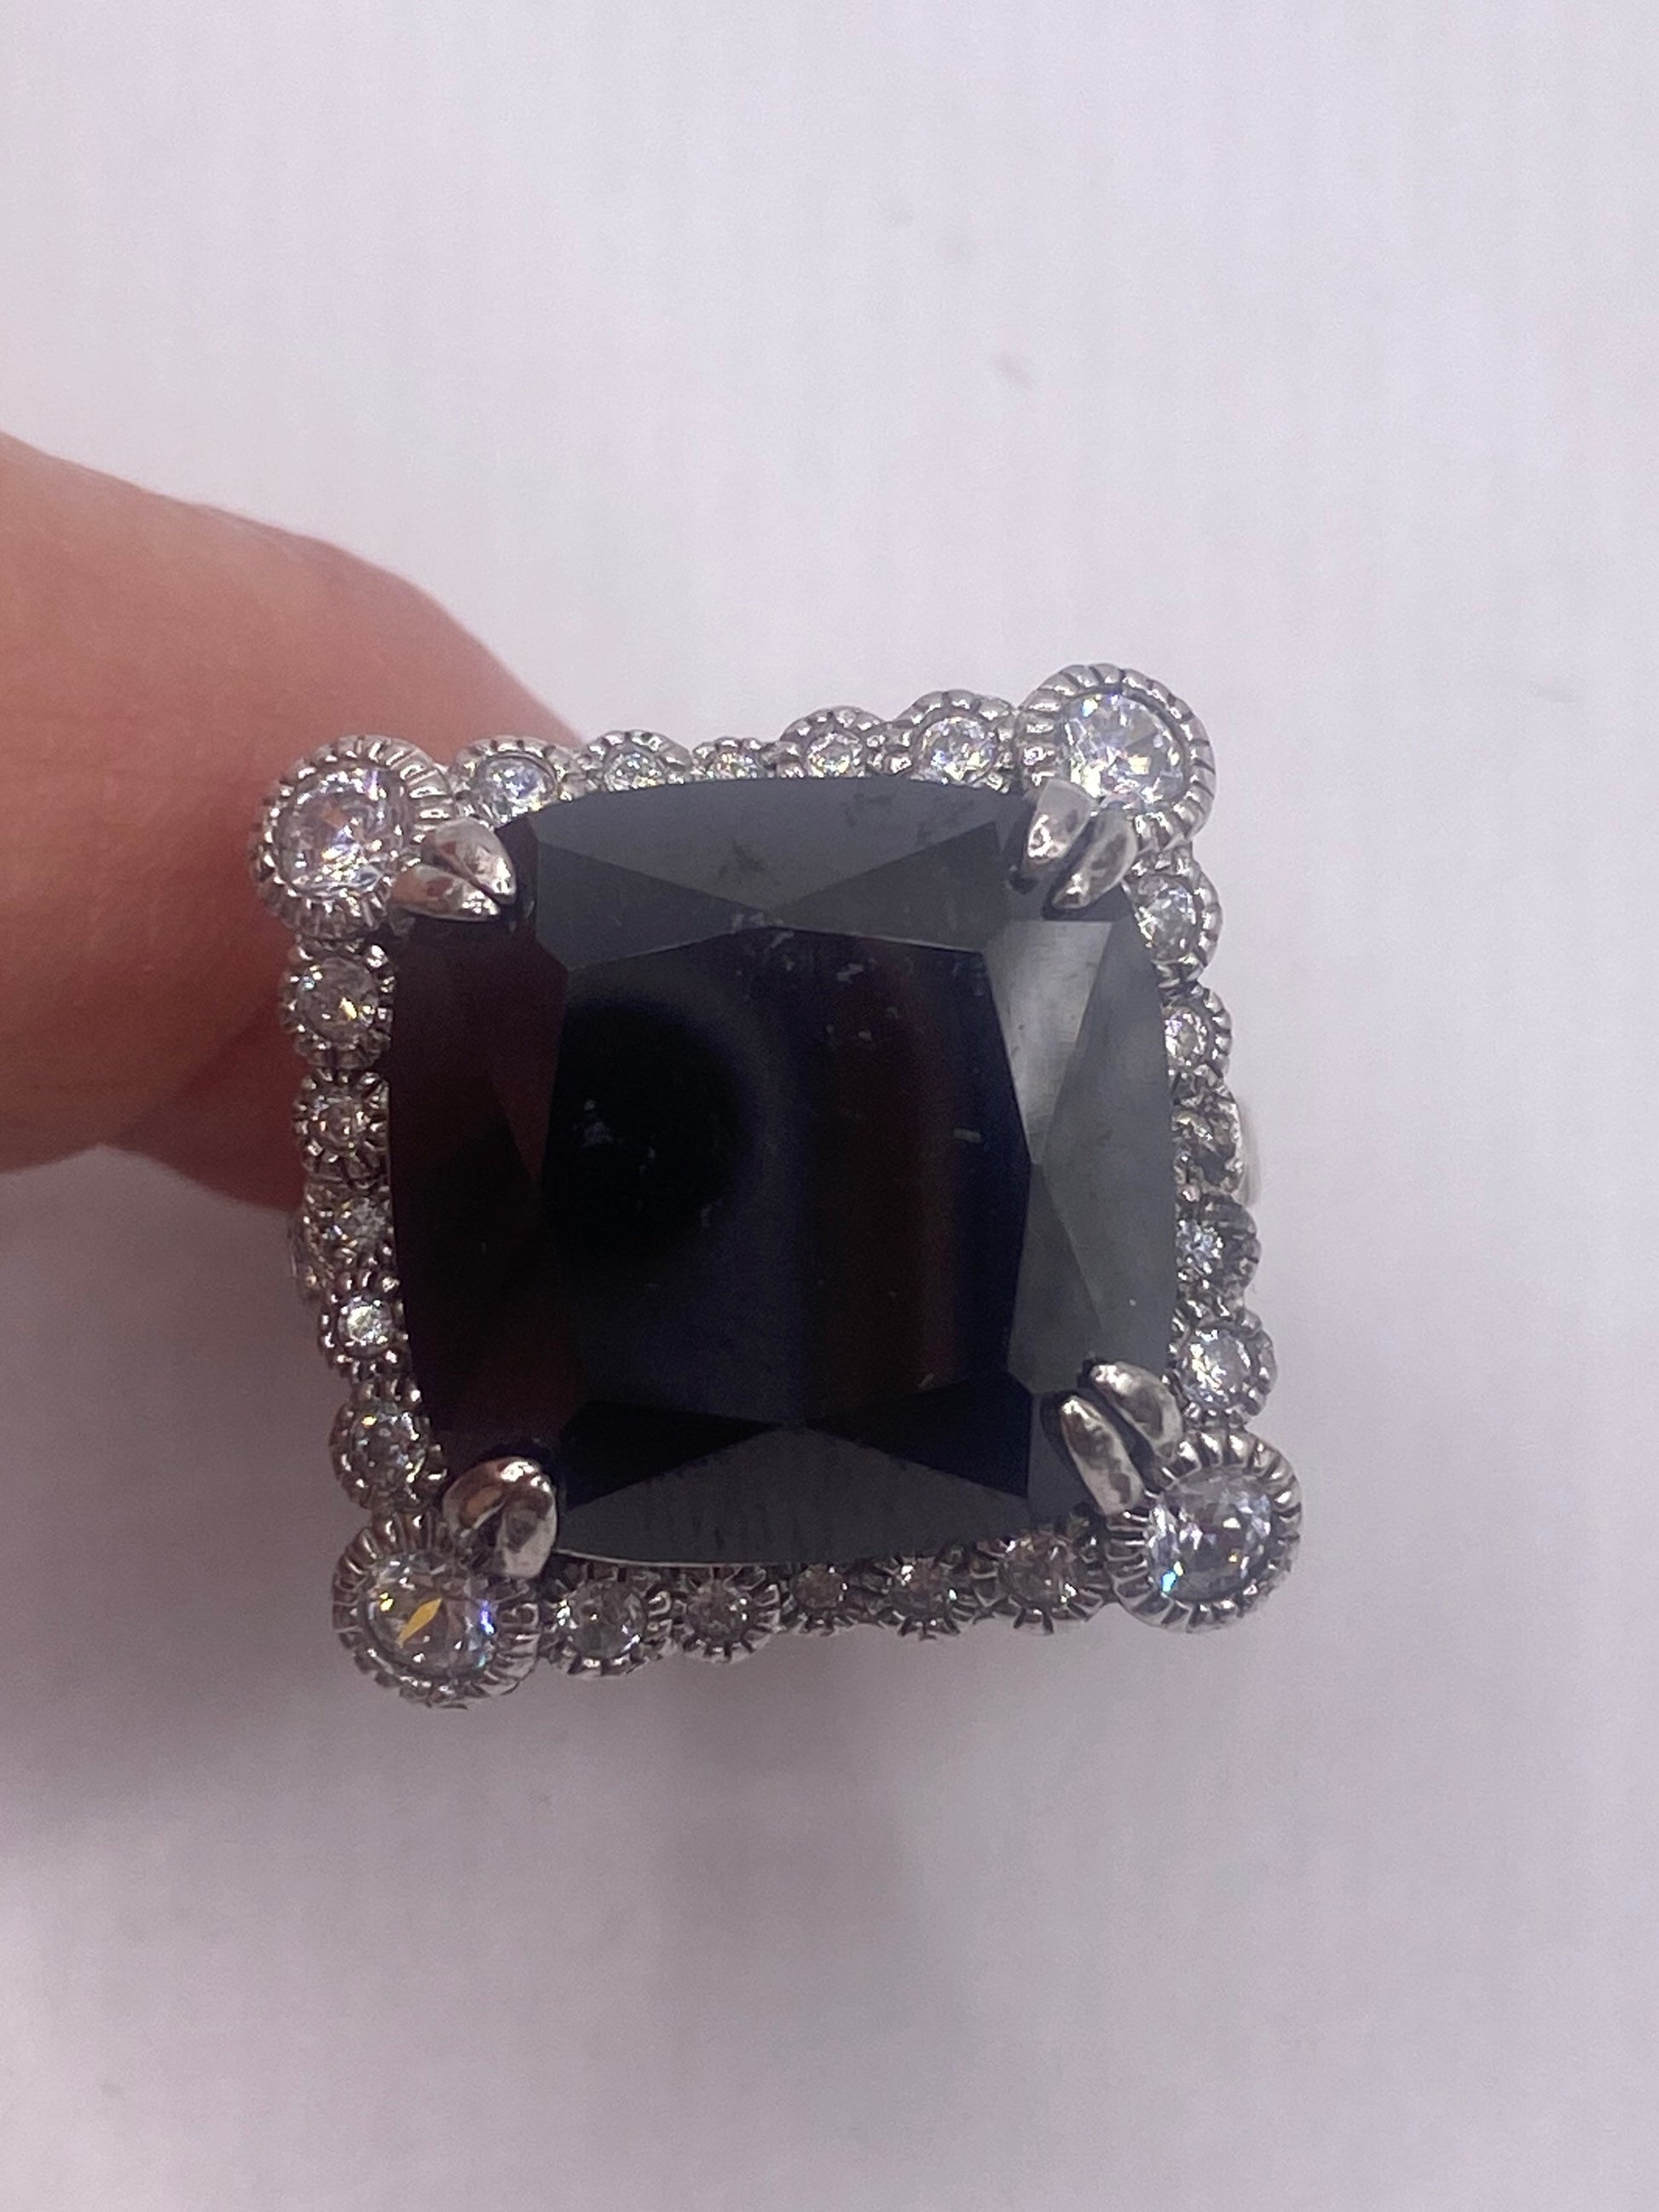 Vintage Black Jet Cubic Zirconia Crystal Sterling Silver Cocktail Ring Size 9.25